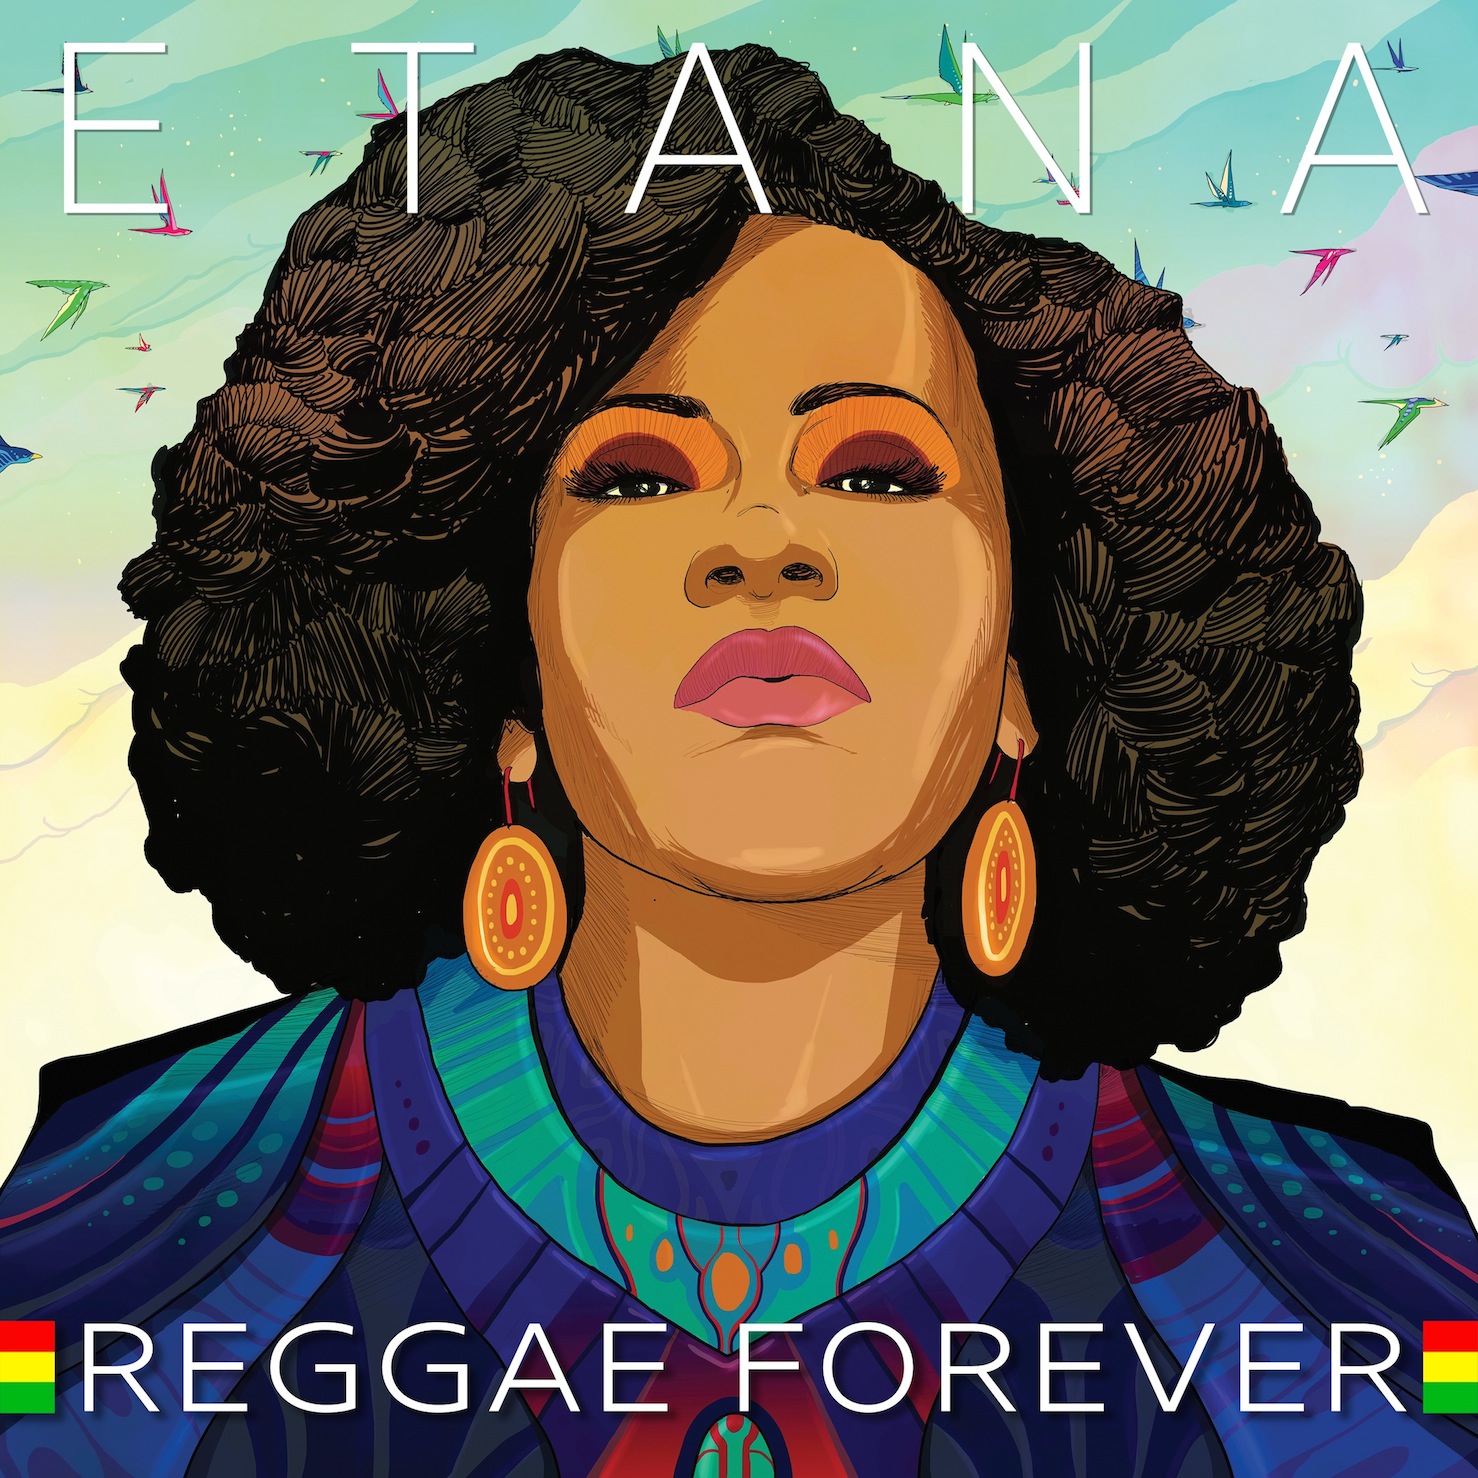 Grammy Nominated Reggae Artist Etana Announces 2019 Tour